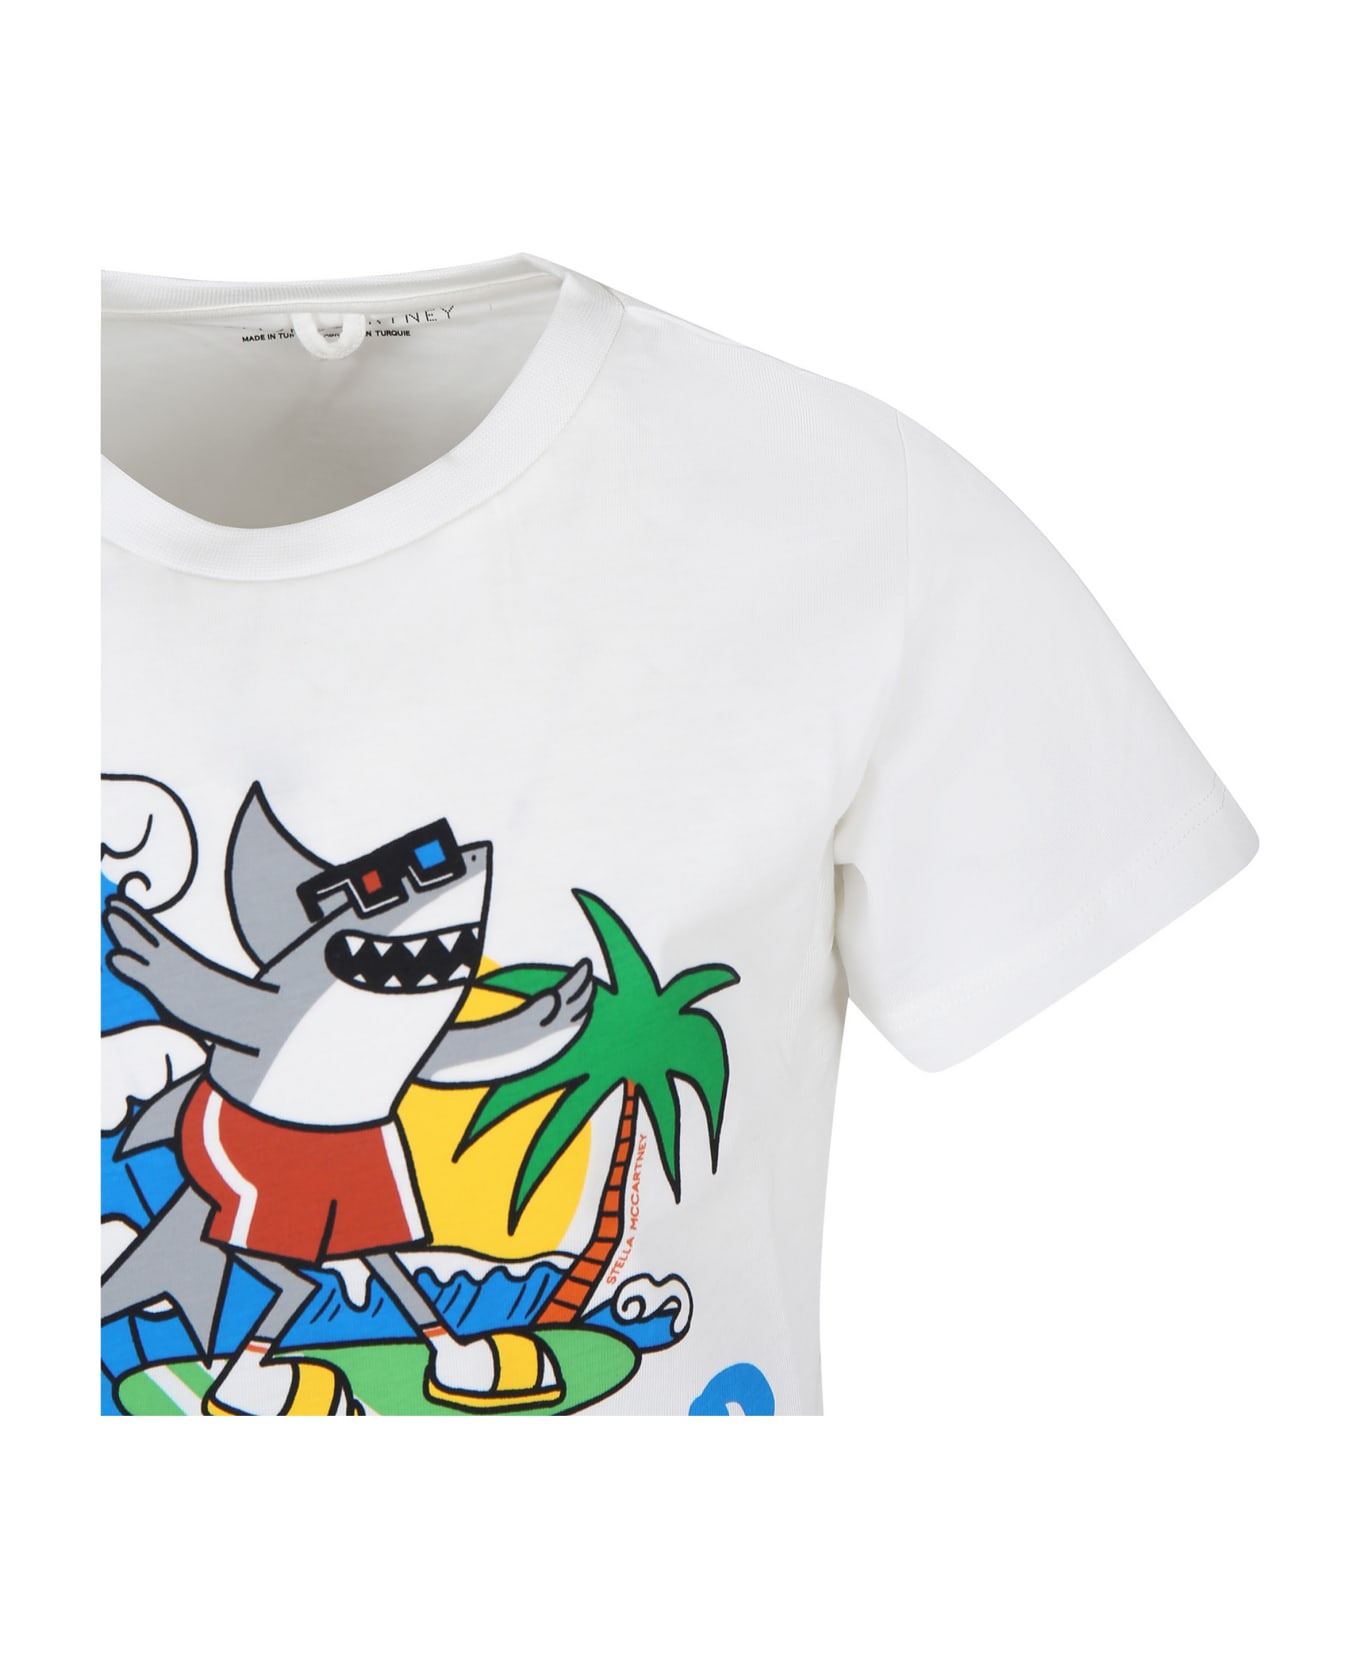 Stella McCartney Kids Ivory T-shirt For Boy With Shark Print - Ivory